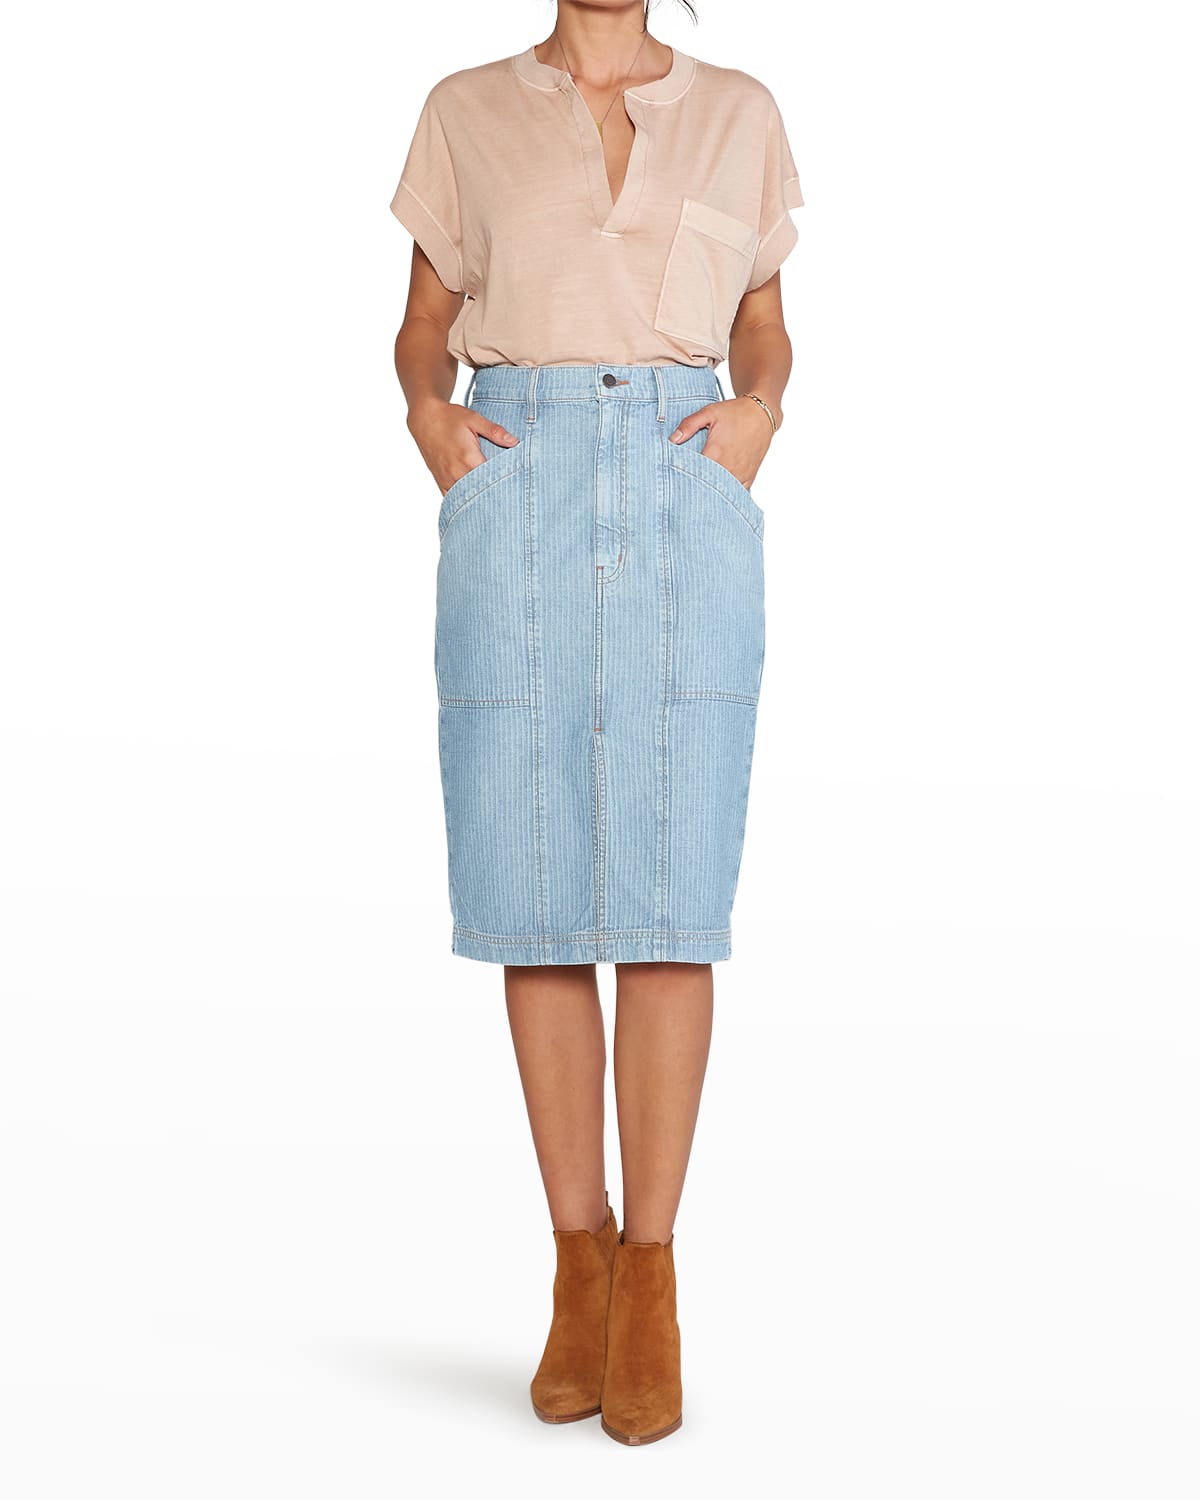 ETICA Arlet Organic Cotton Pinstripe Denim Mini Skirt